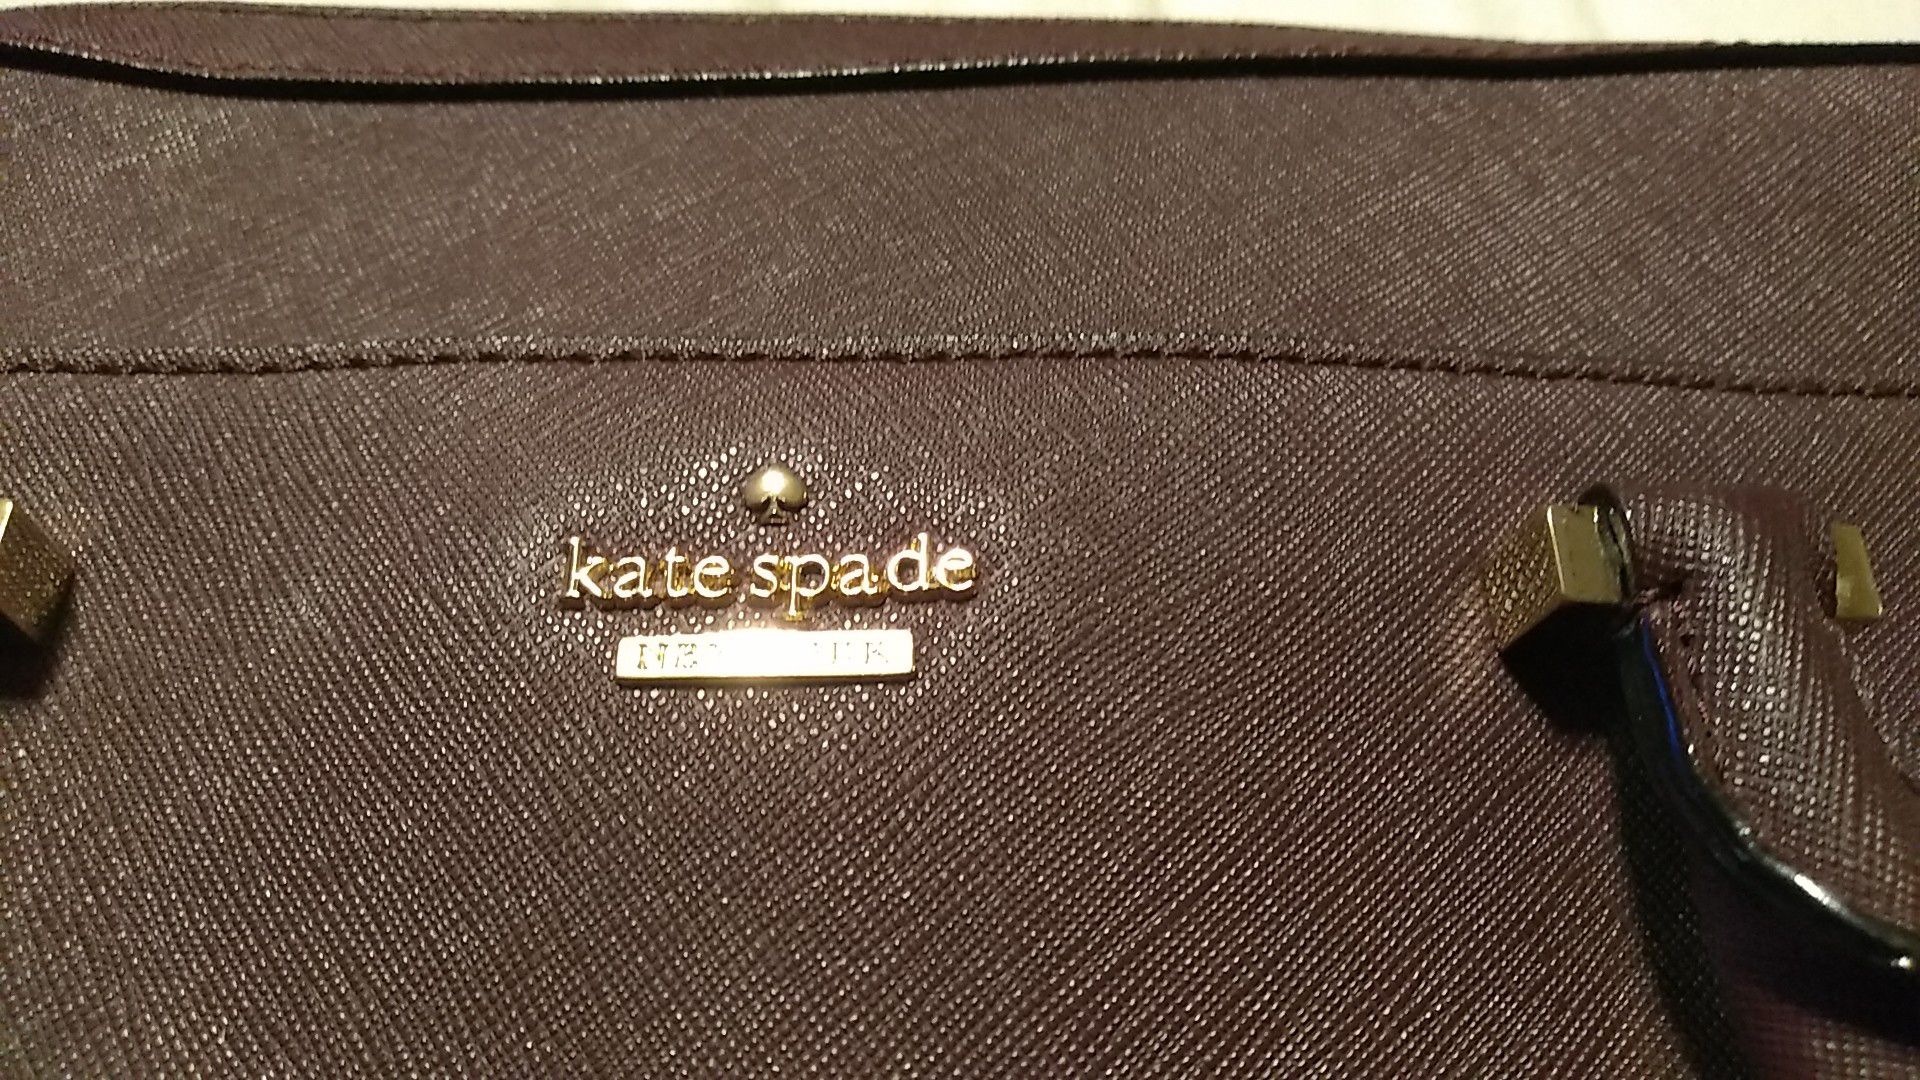 Kate Spade sachel